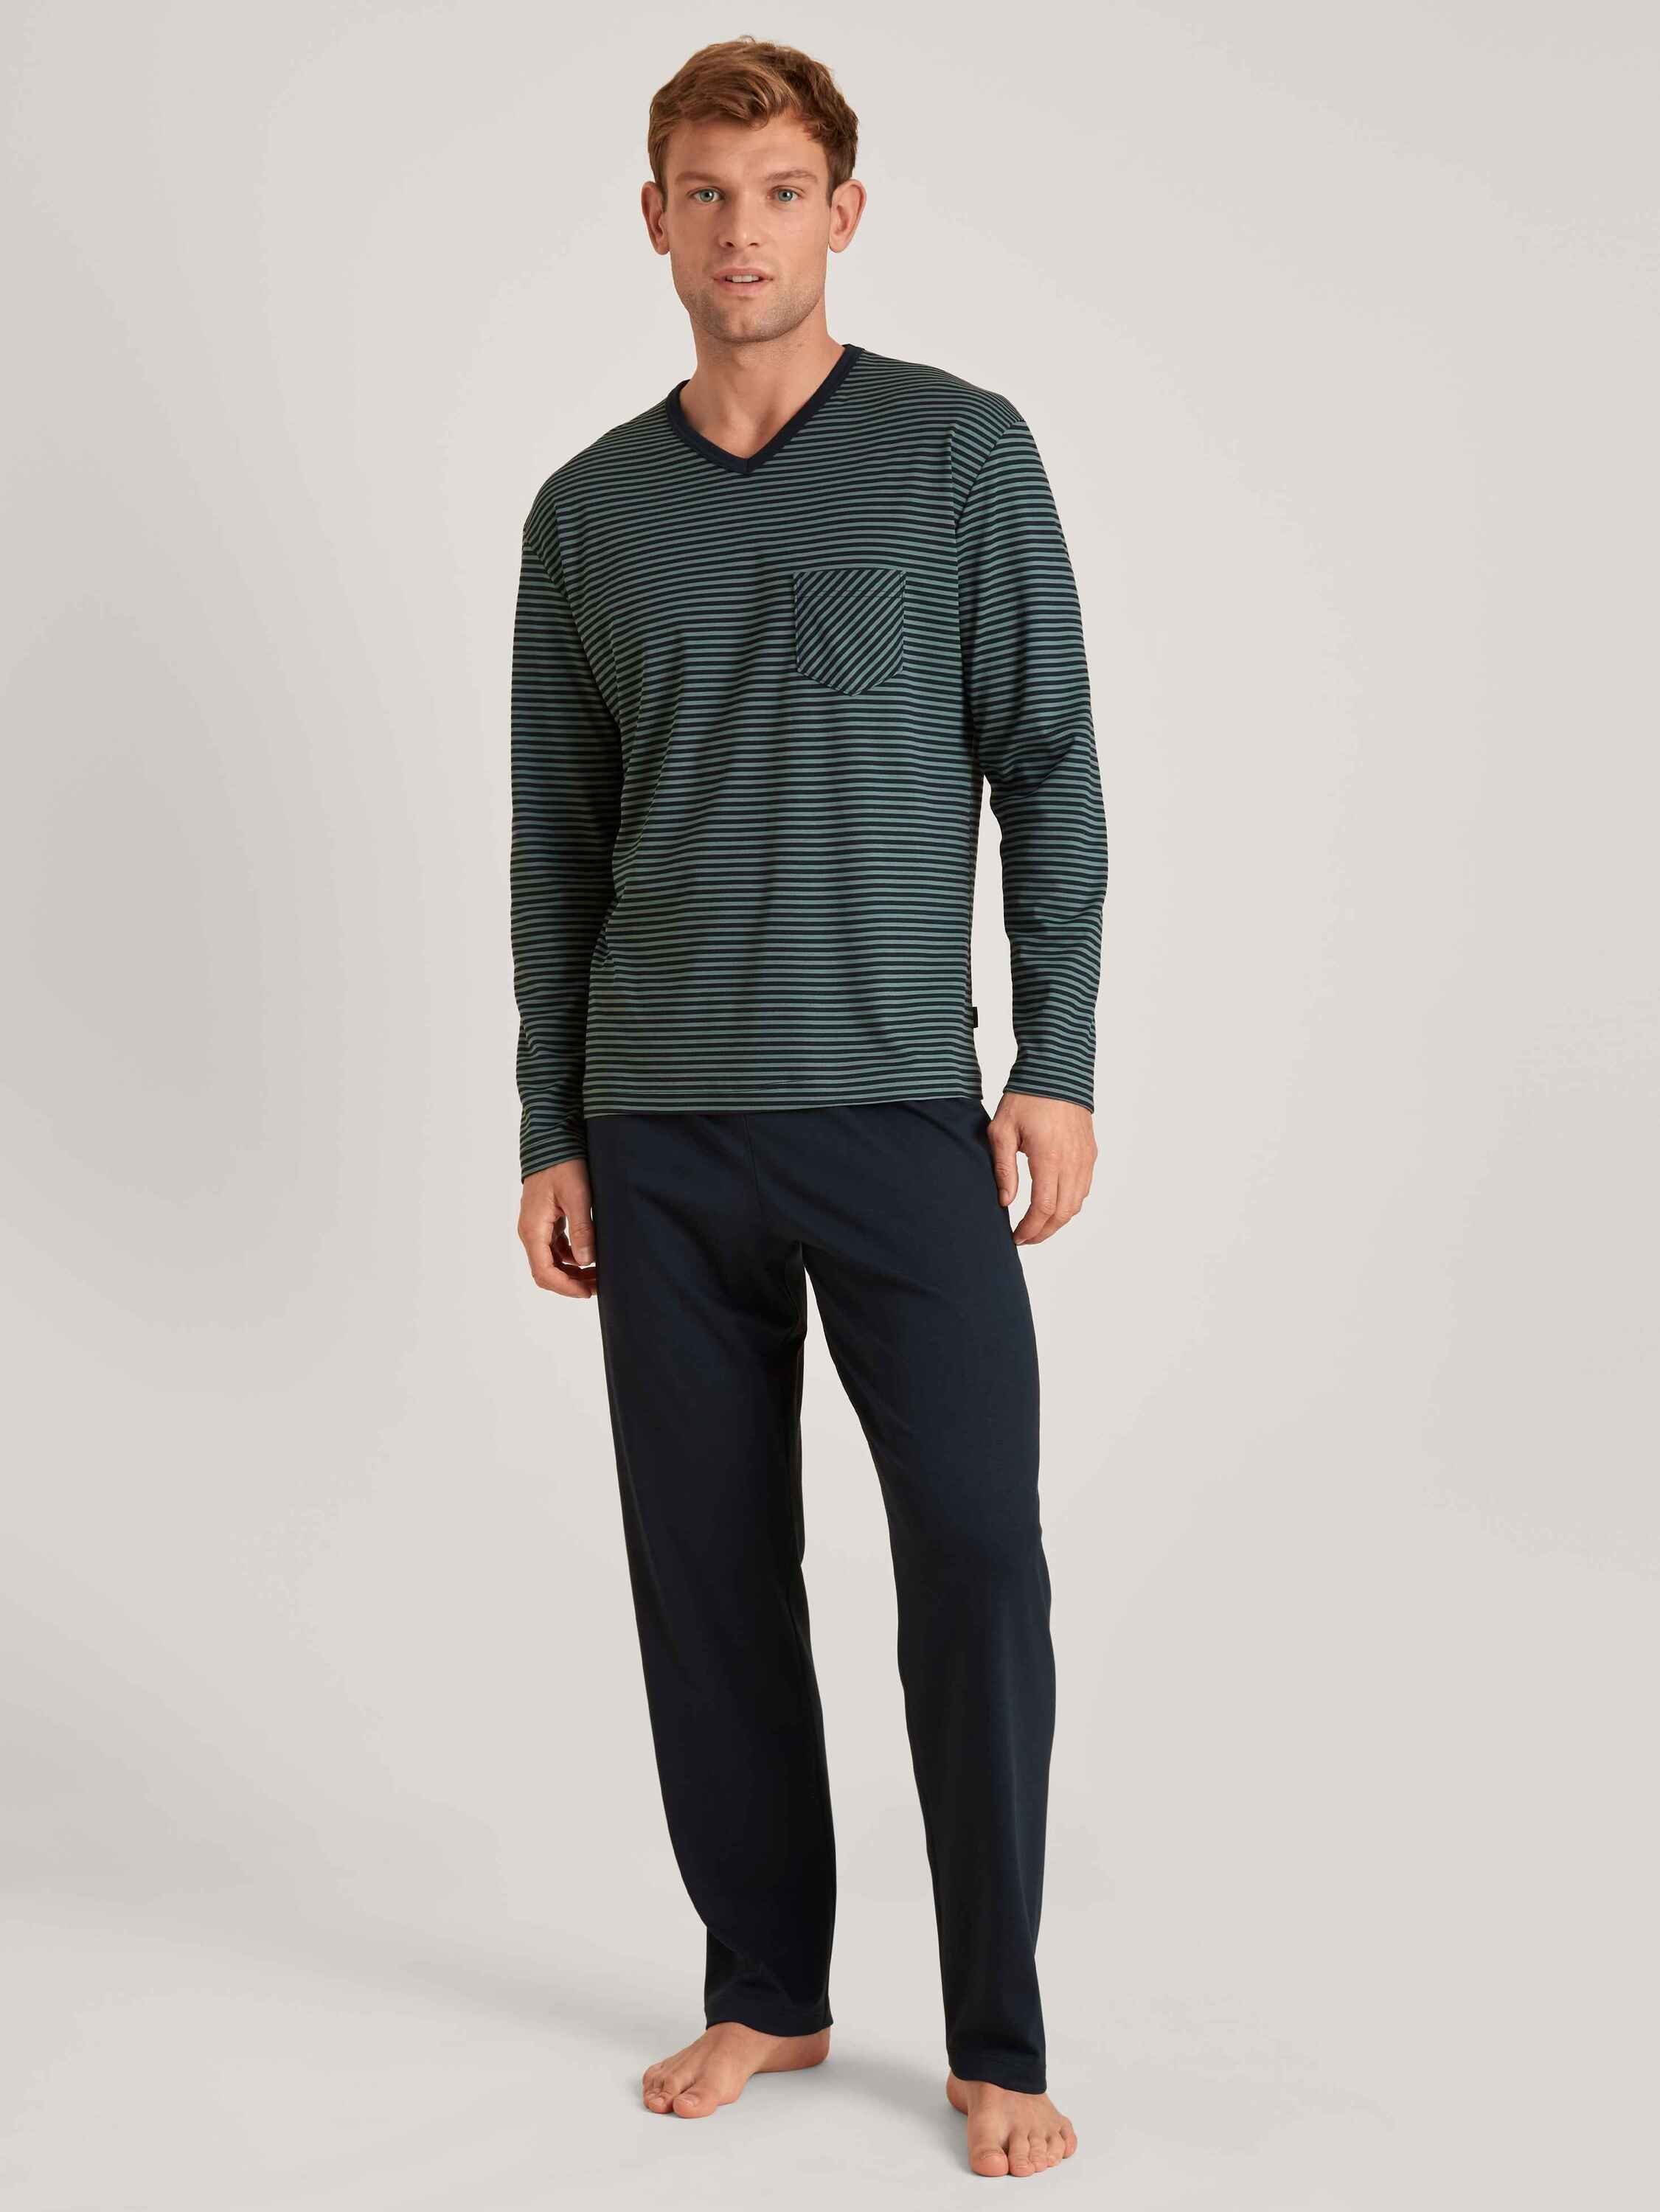 Lange Baumwolle Herren Pyjamas online kaufen | OTTO | Pyjamas